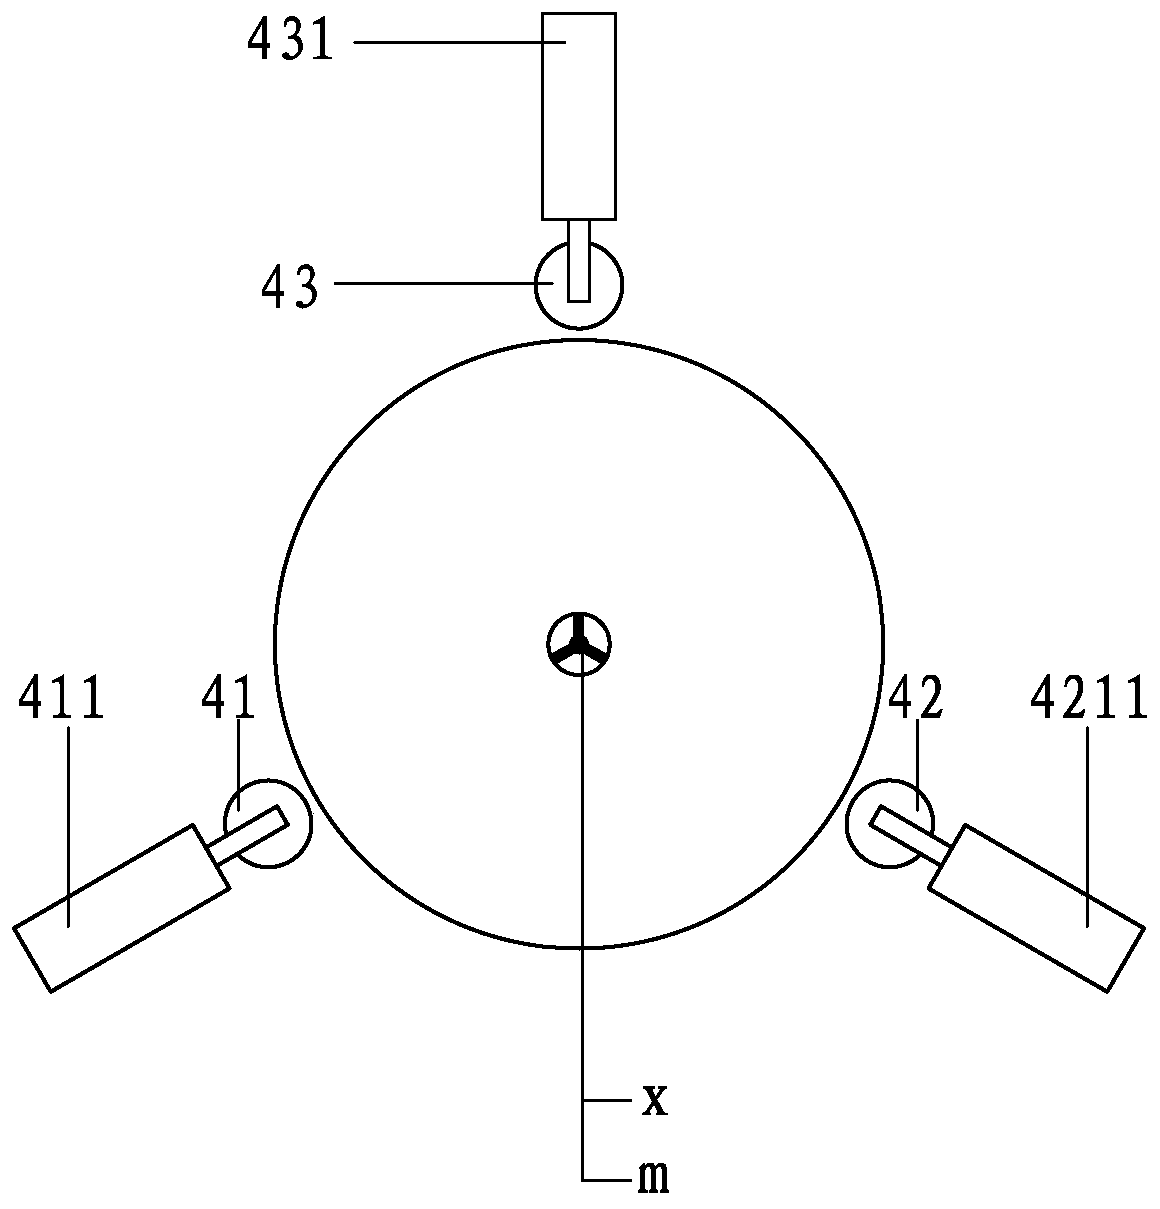 An automatic precision rotary cutting machine